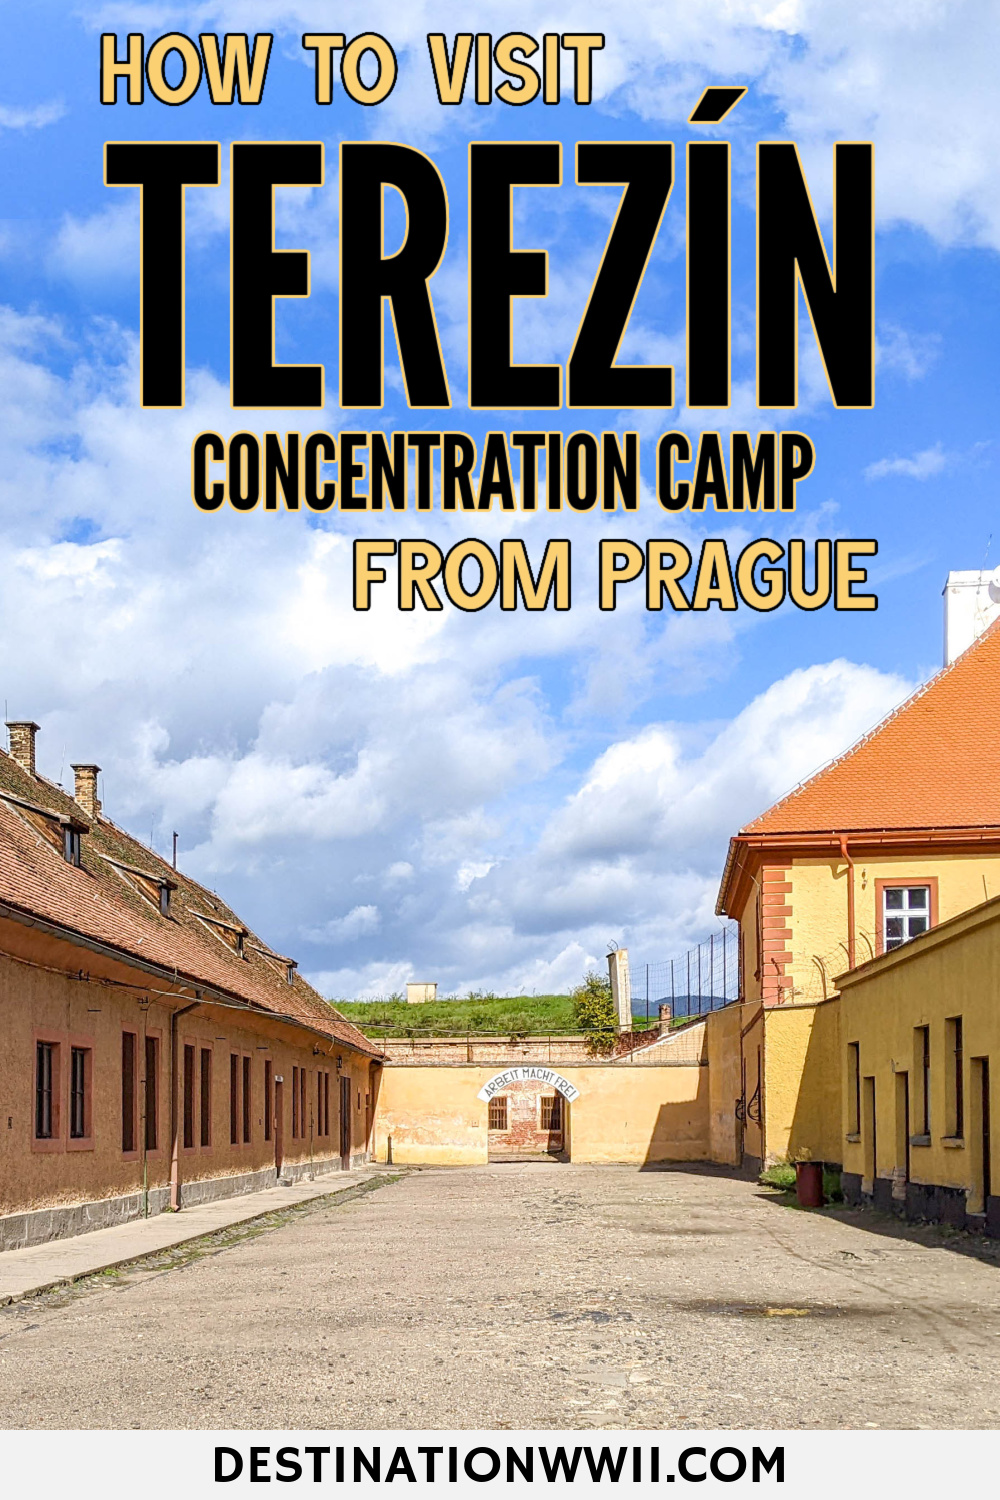 terezin concentration camp visit